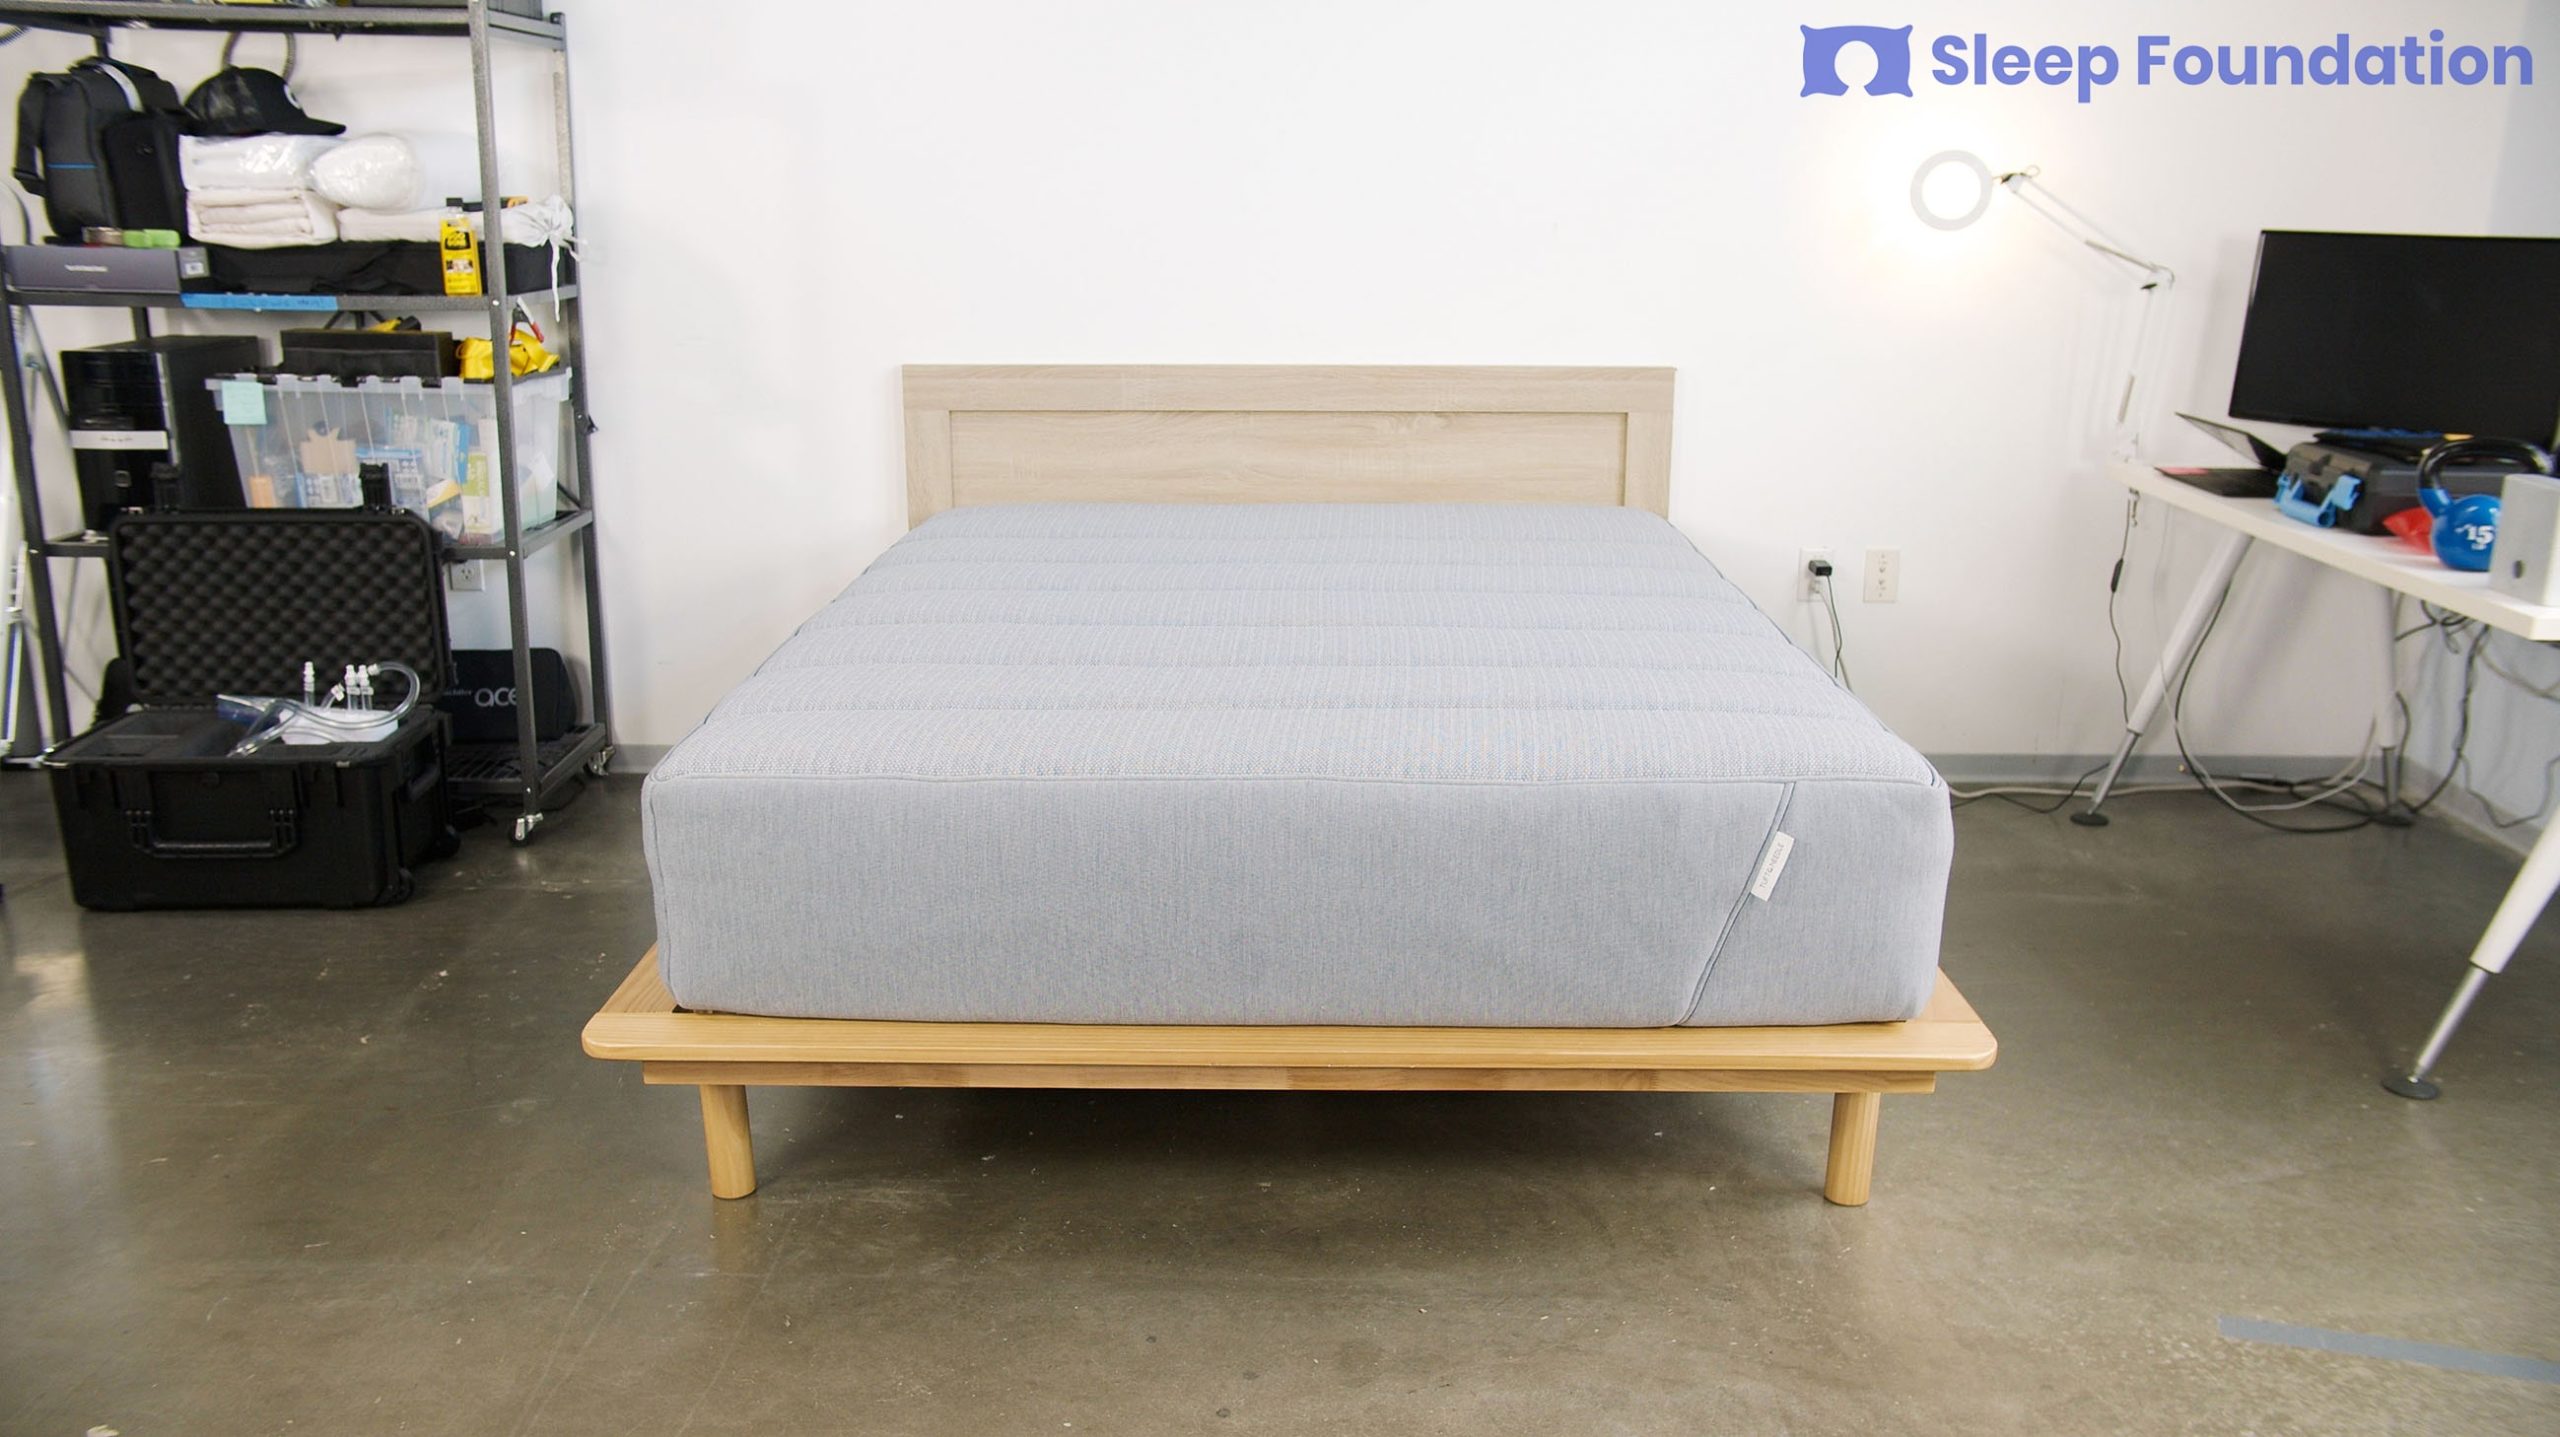 tuft & needle hybrid mattress review